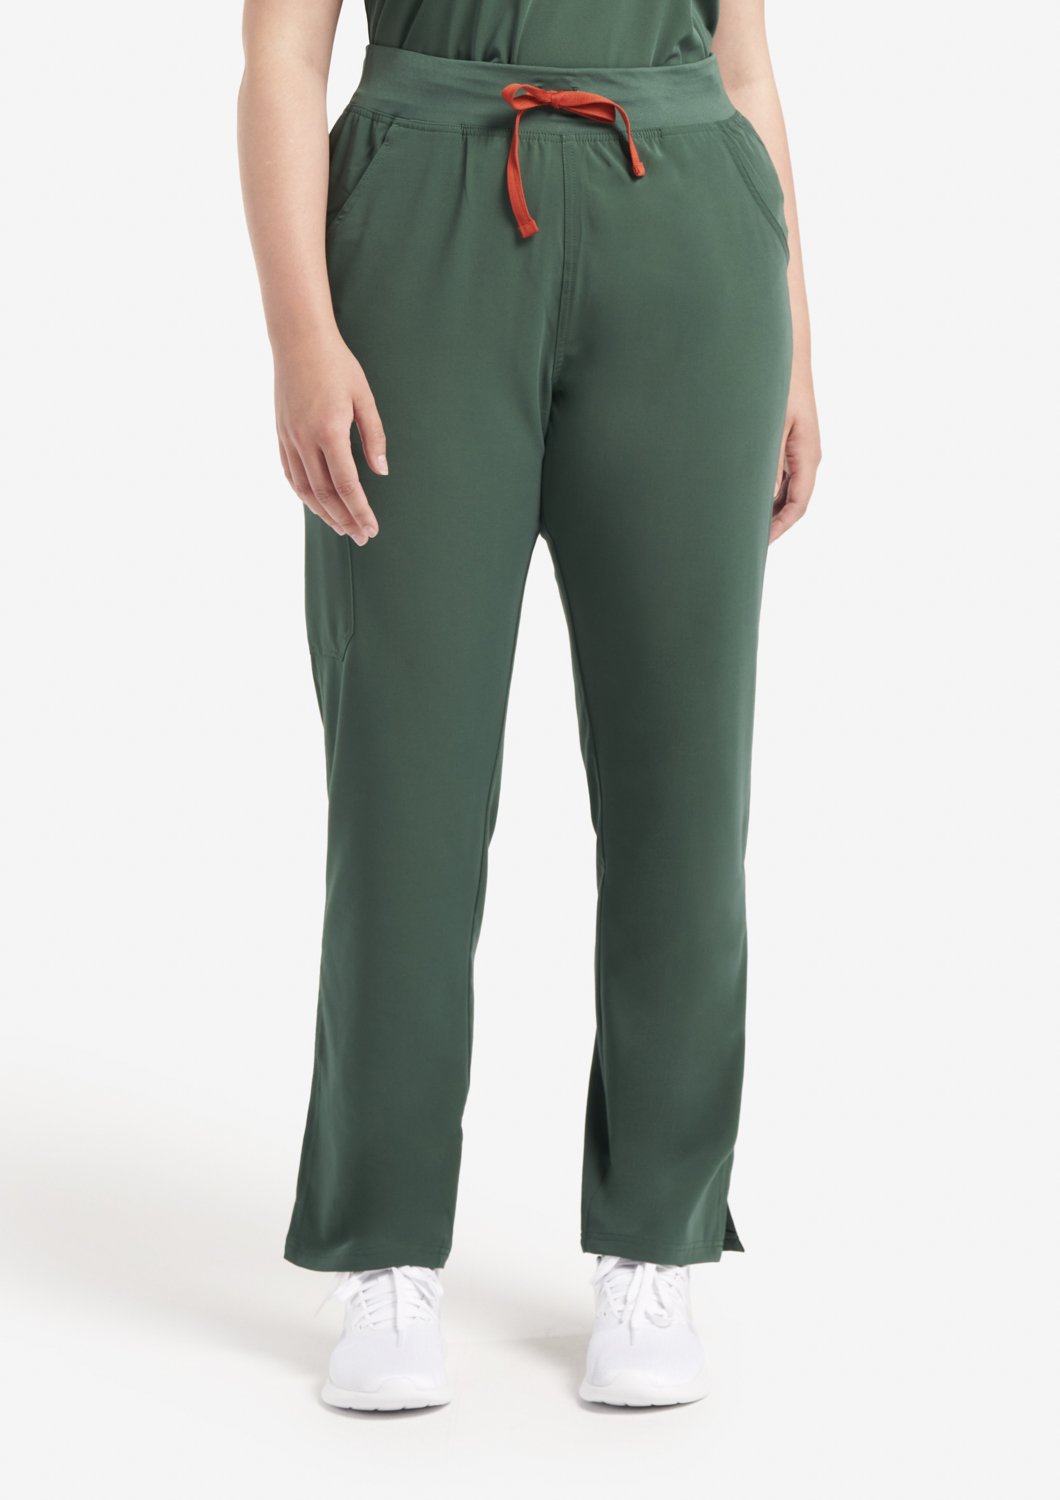 LAGO Scrubs - Women's Blush Trillium - 3-Pocket Scrub Pants